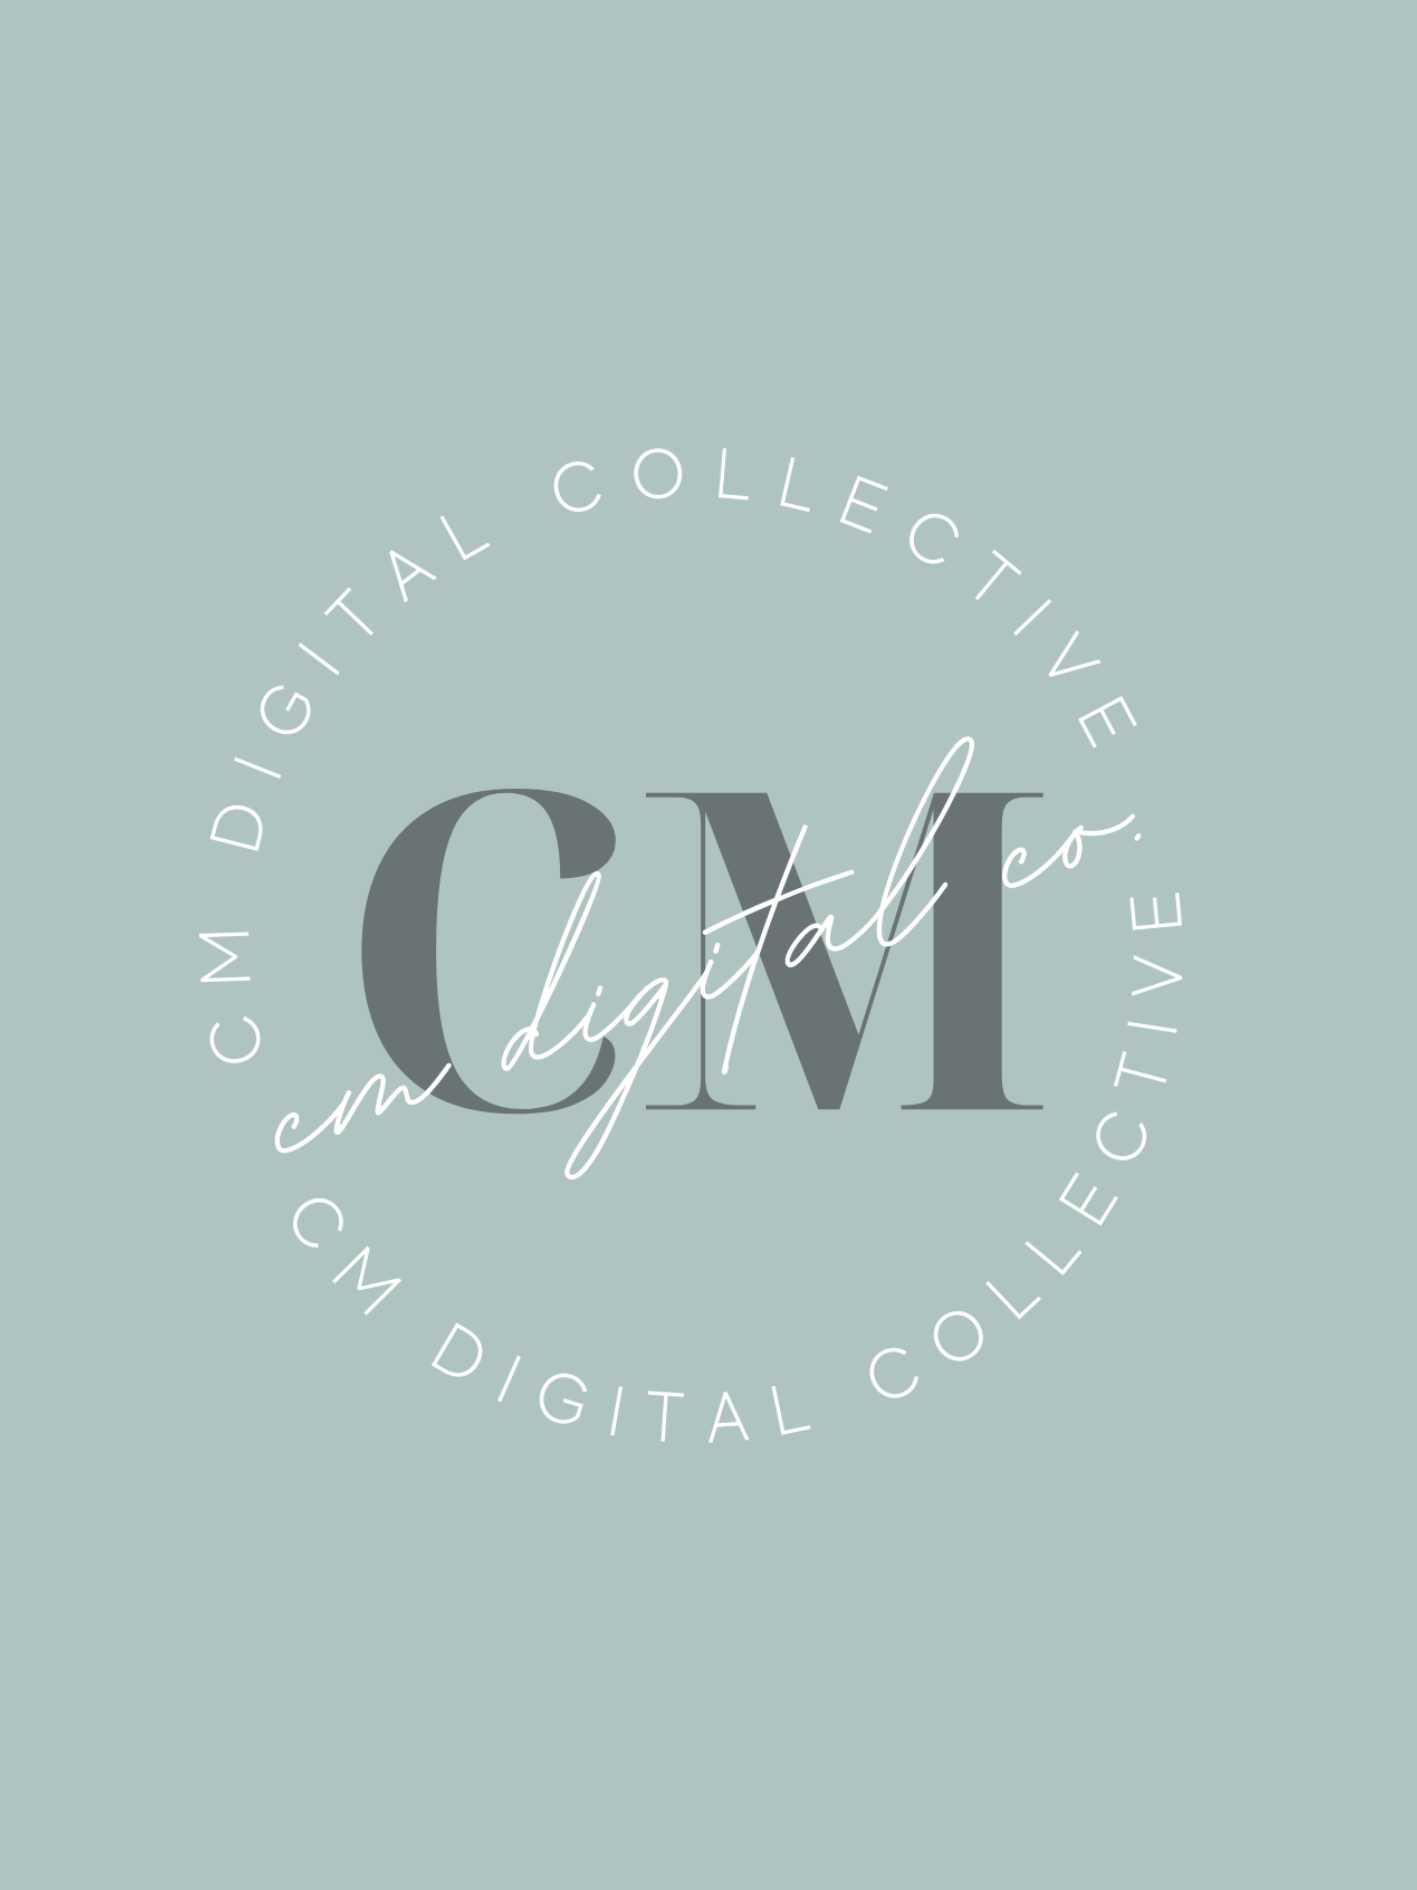 CM Digital Collective